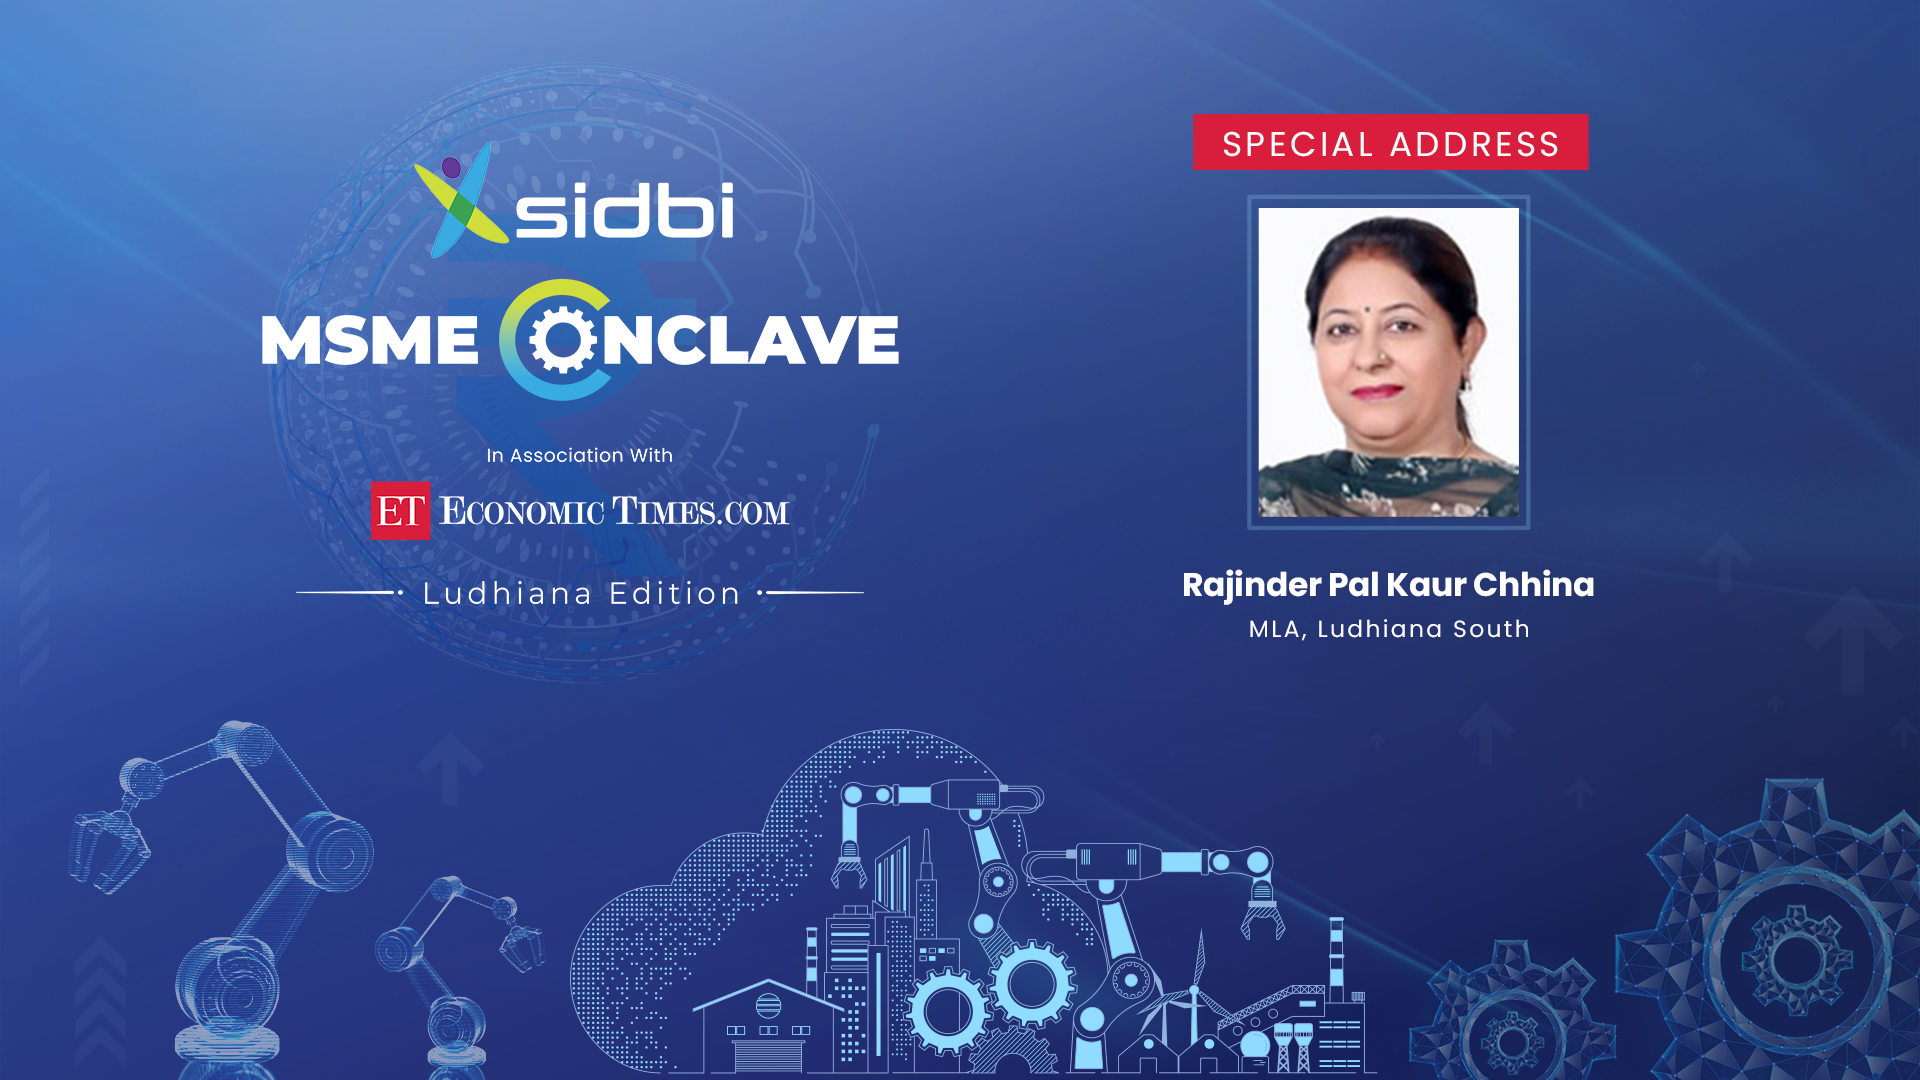 SIDBI MSME Conclave : Special Address by Rajinder Pal Kaur Chhina, MLA, Ludhiana South